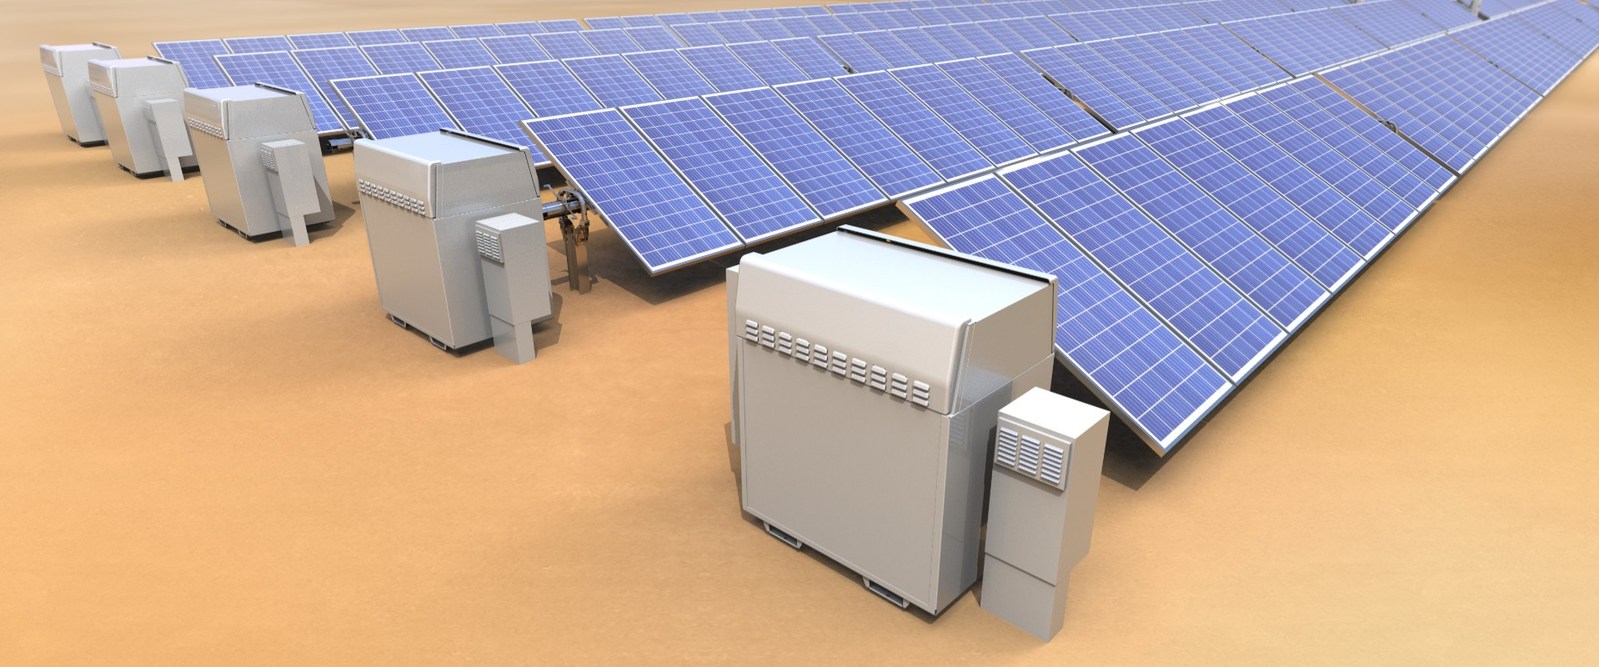 tata solar power share price